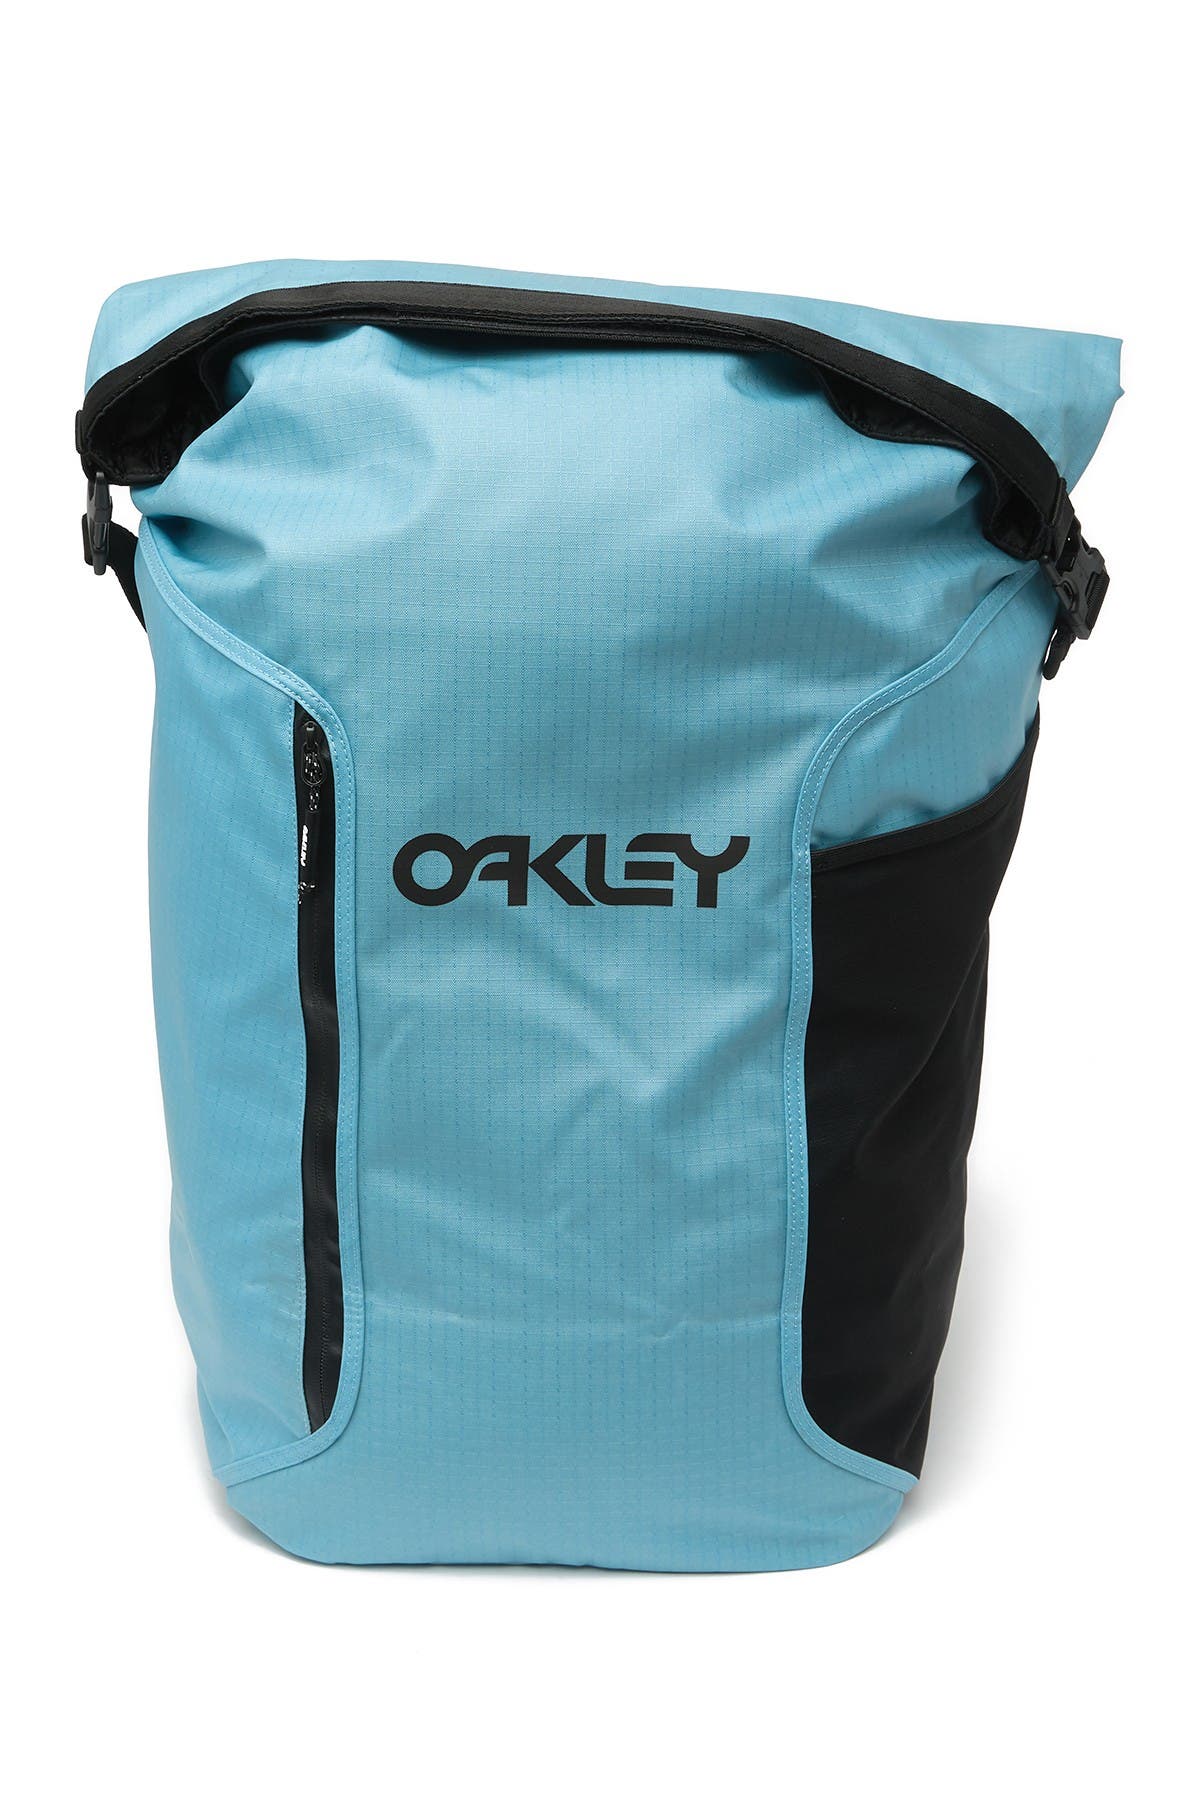 oakley wet dry backpack